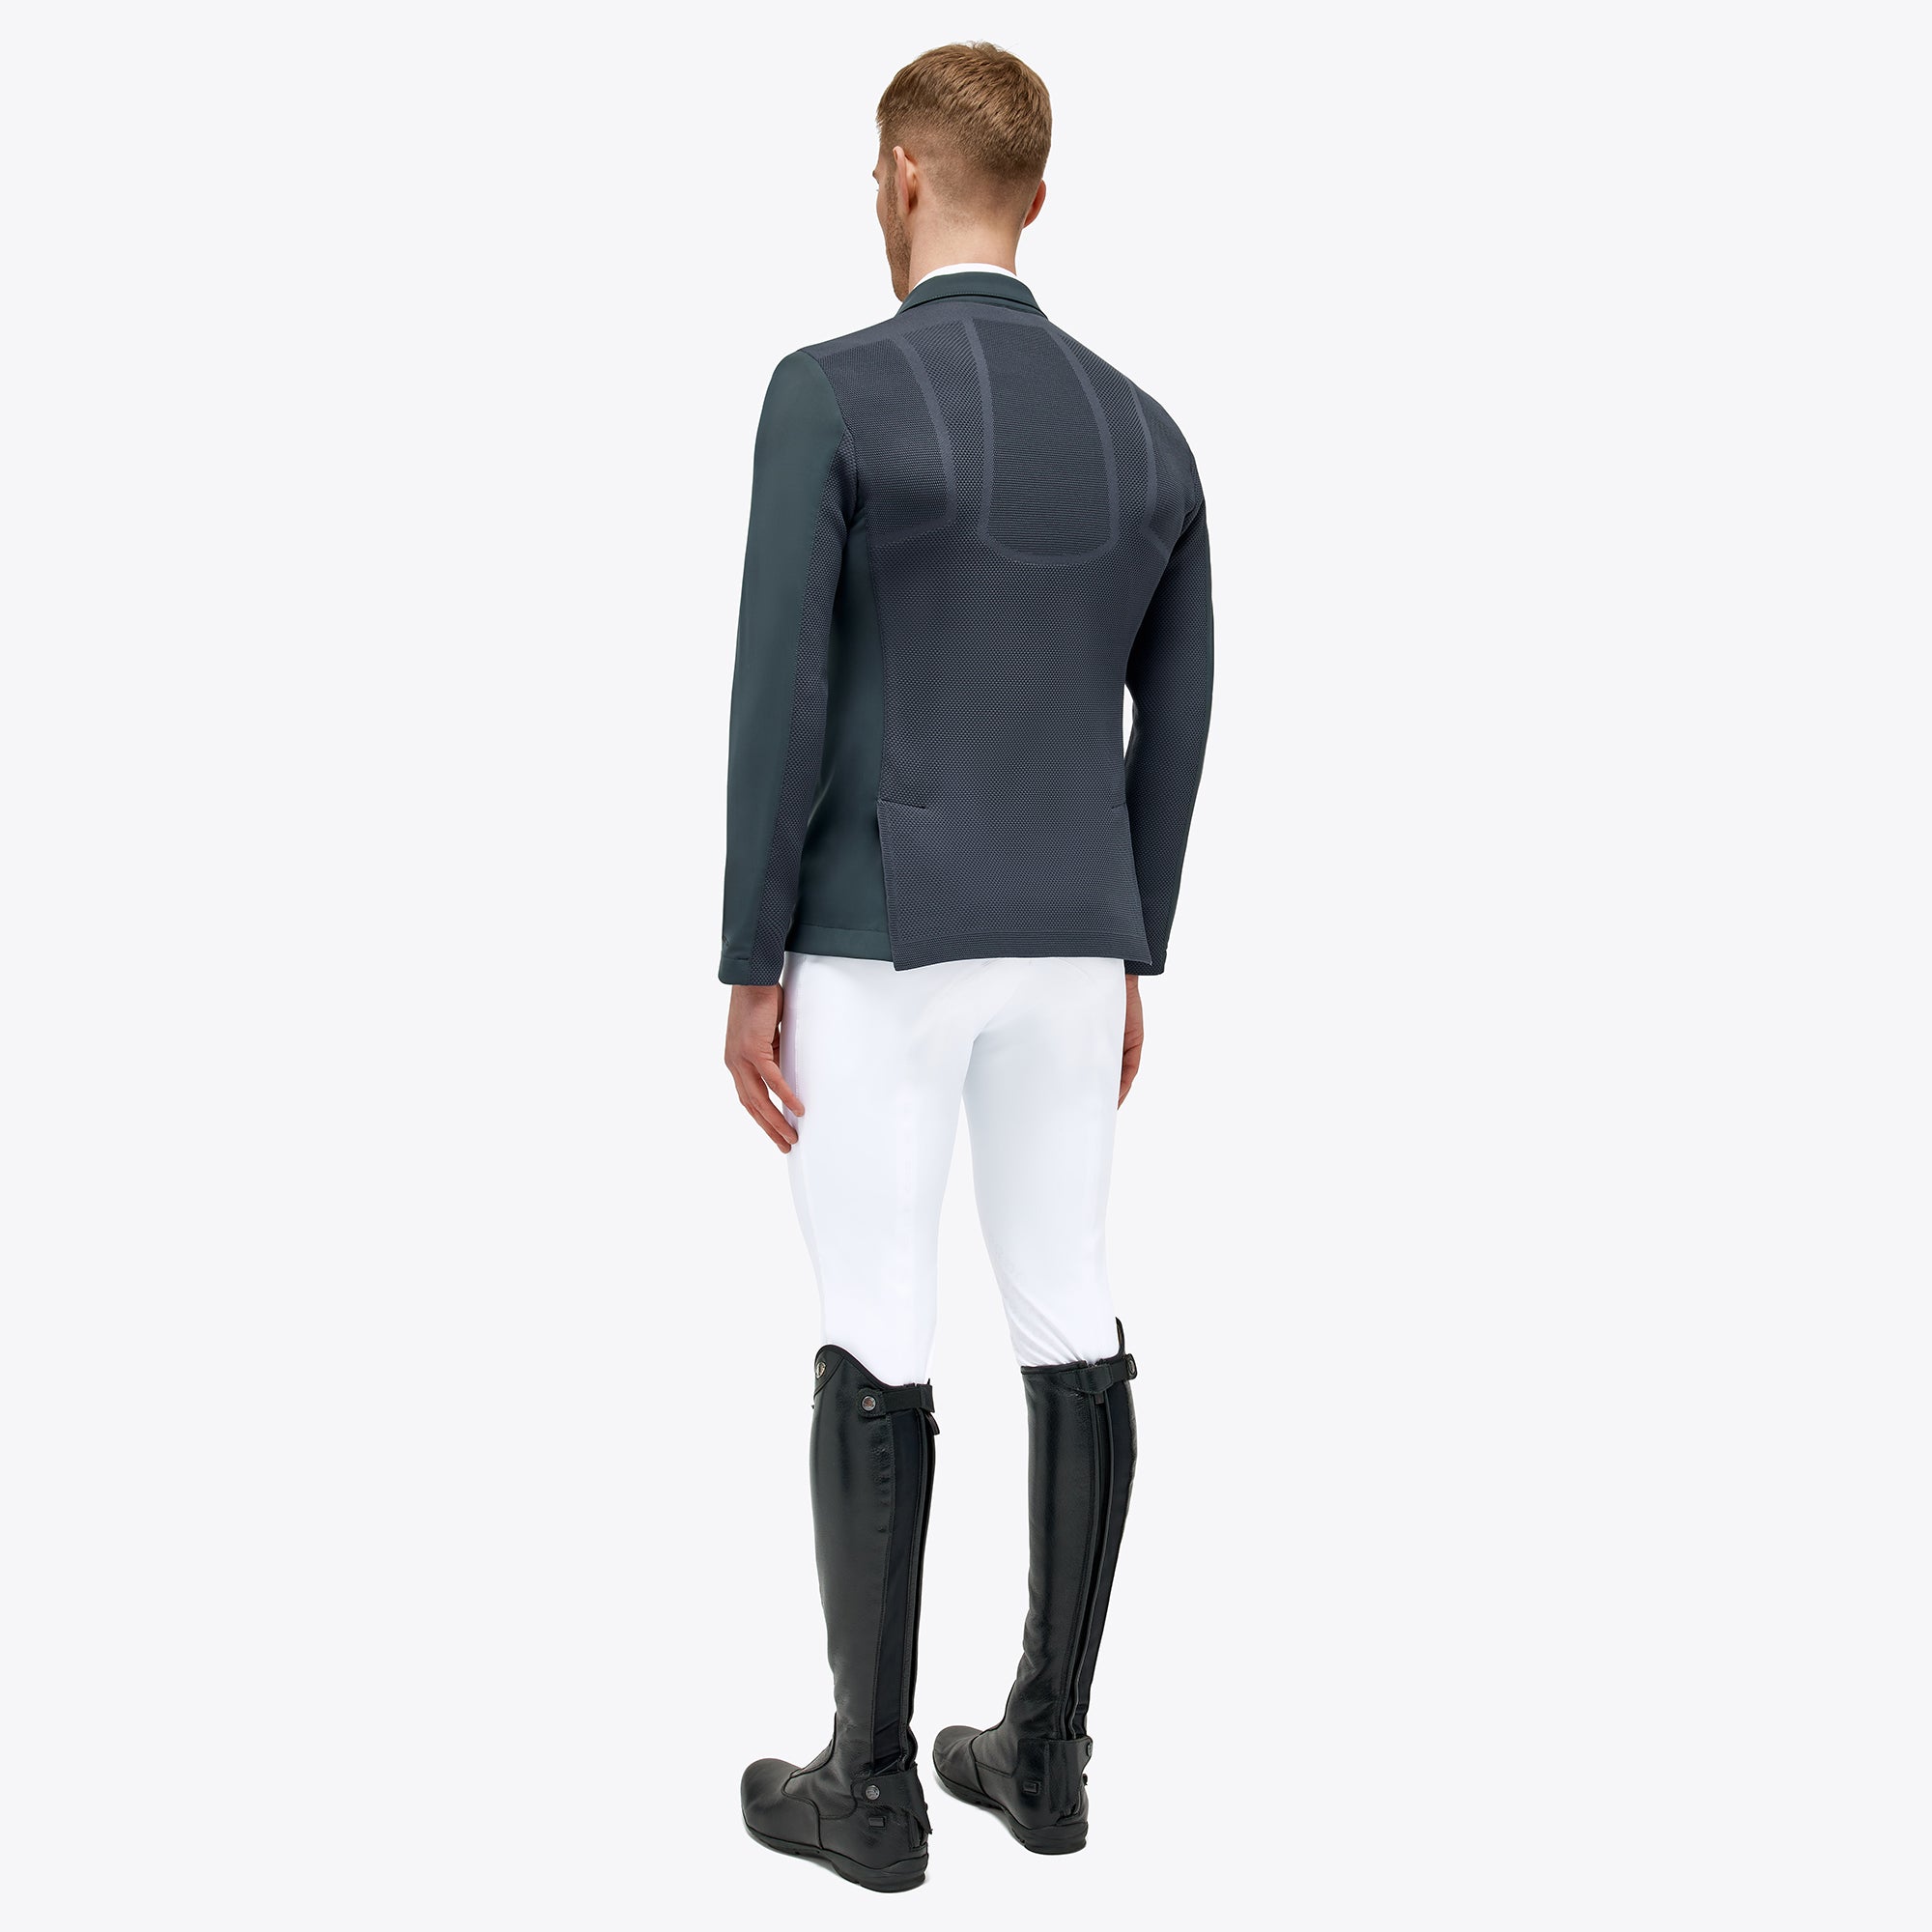 Mens R-Evo Light Tech Knit Zip Riding Jacket - Grey